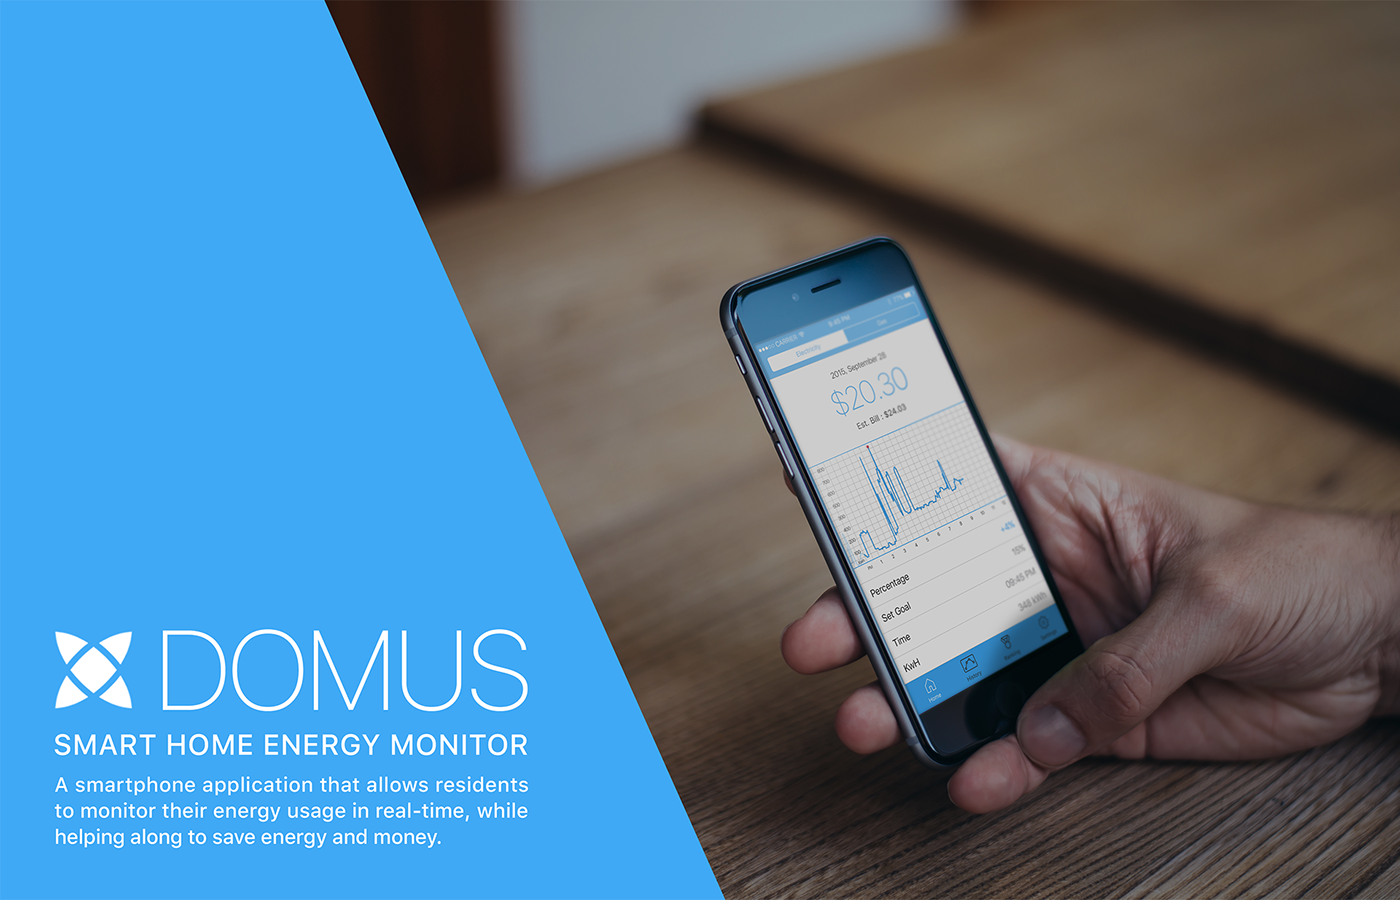 domus home energy risd brown app smartphone application monitor